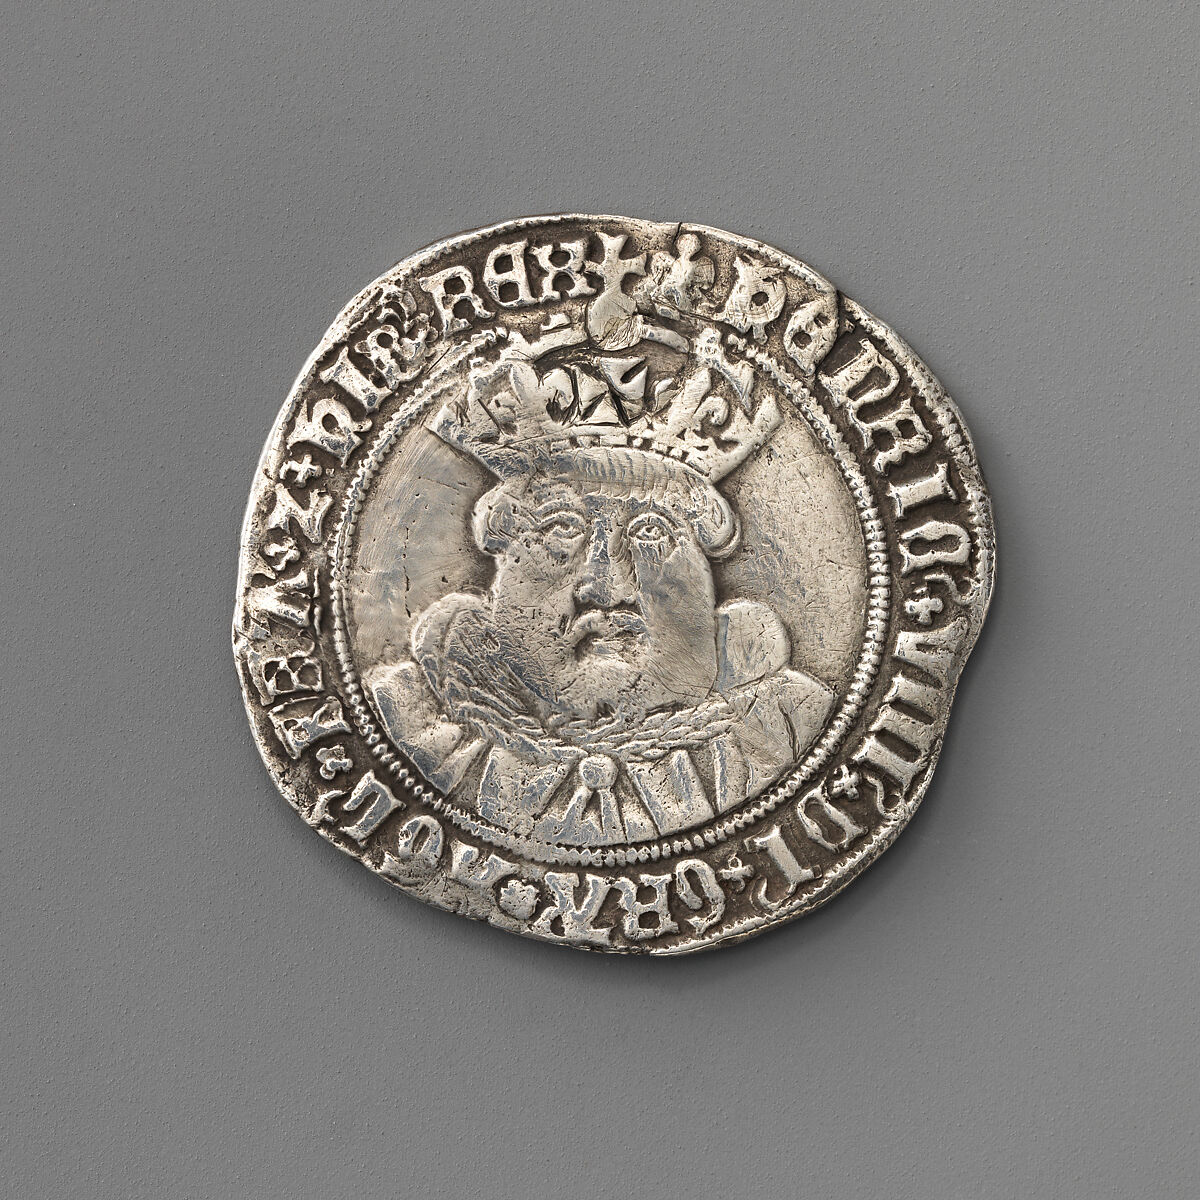 Testoon of Henry VIII (third coinage)